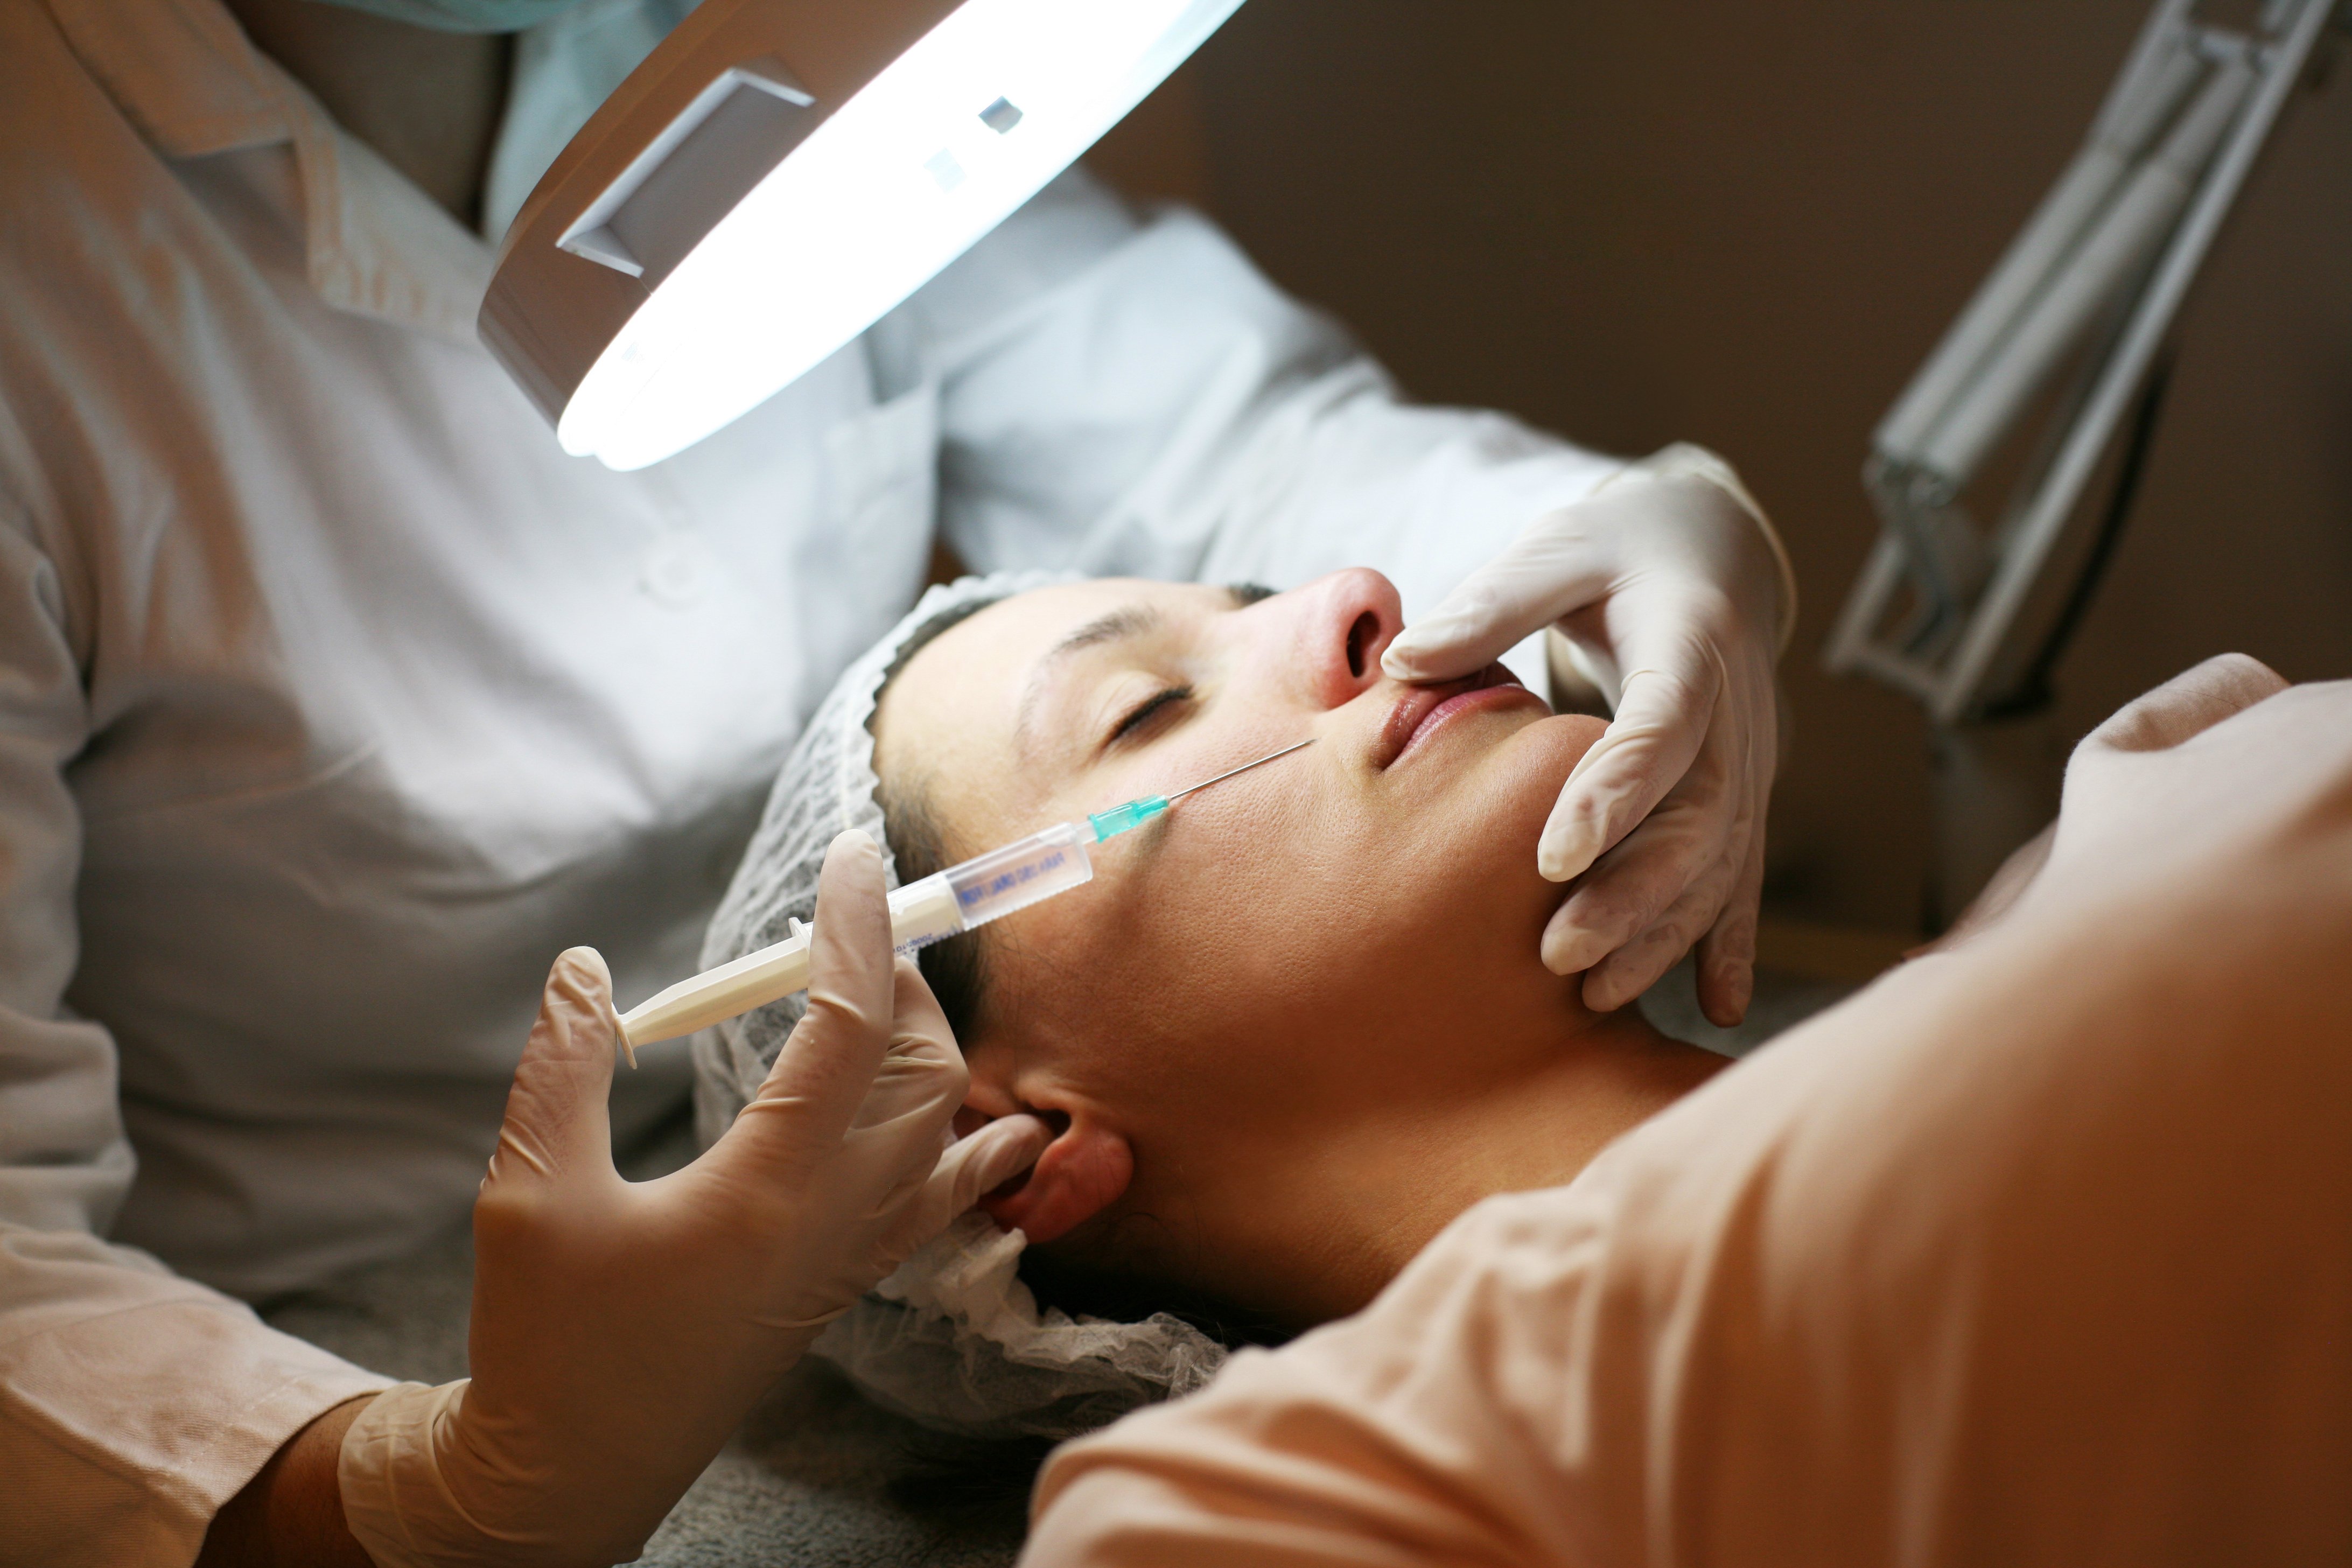 A woman getting a facial procedure | Photo: Shutterstock